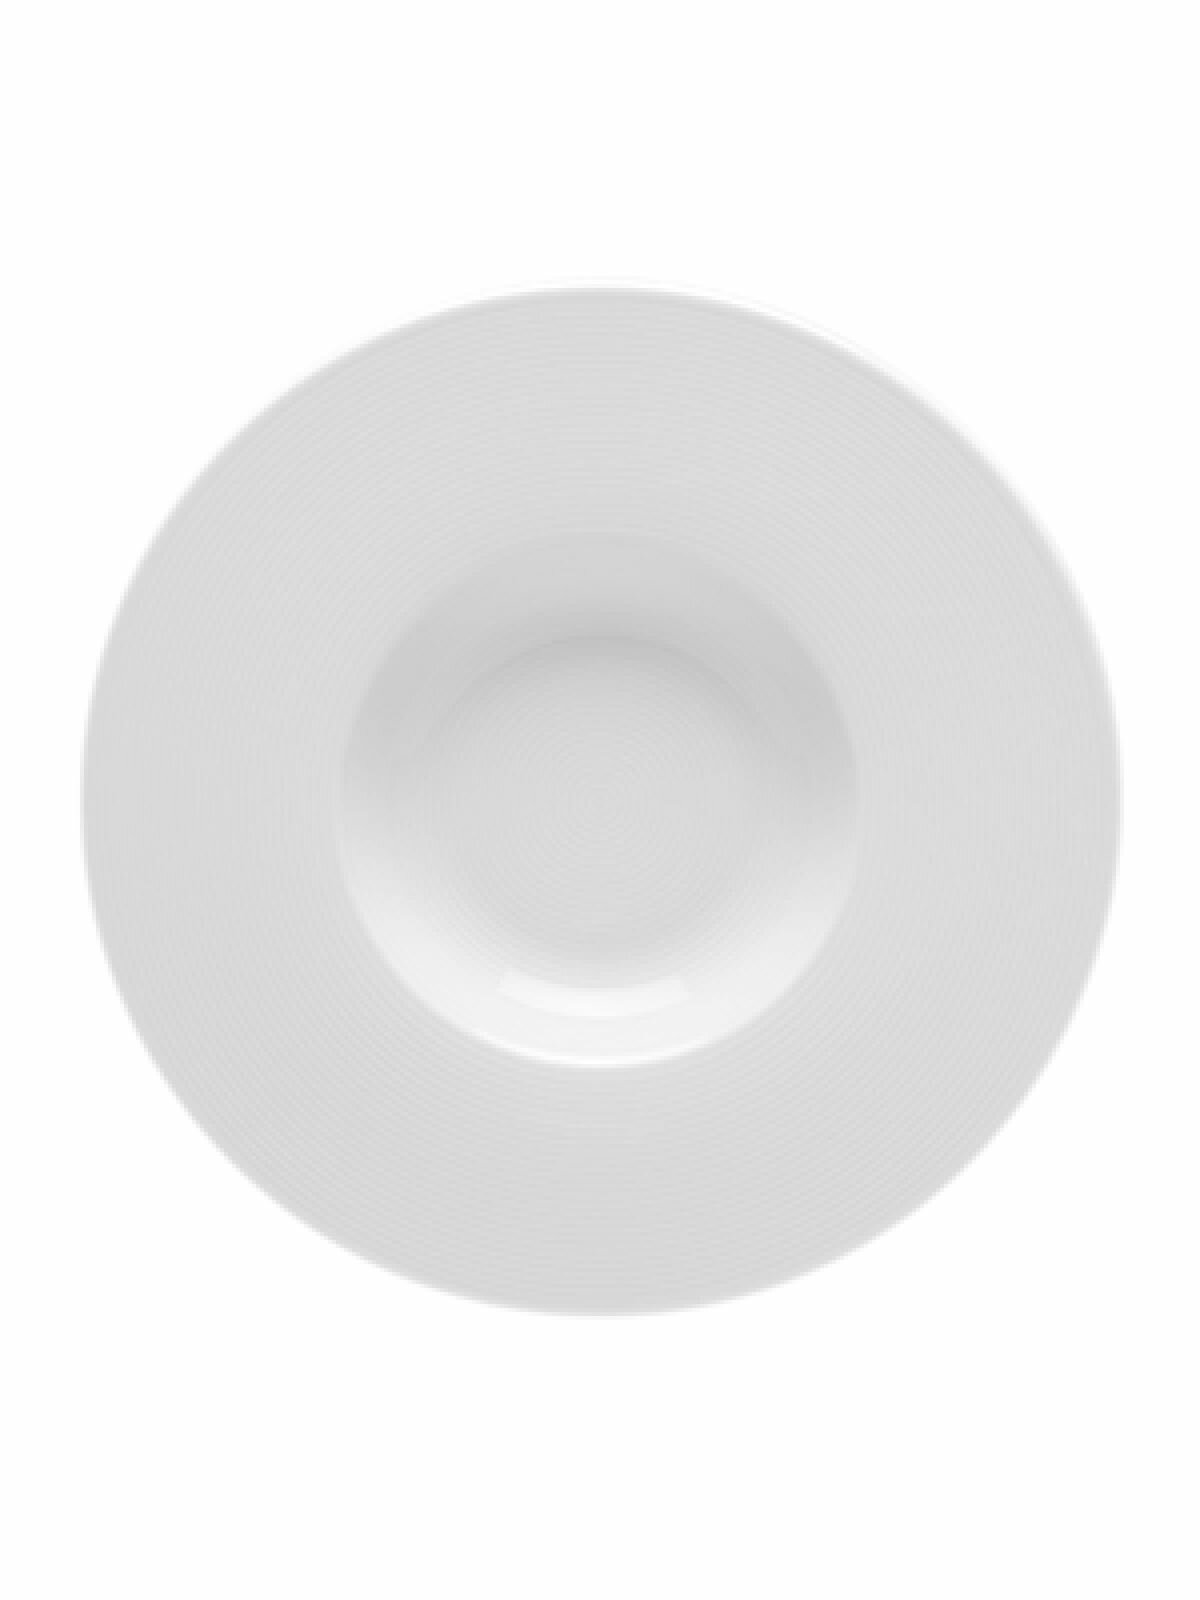 Тарелка глубокая с широким бортом Lubiana Eto круглая, 27 см